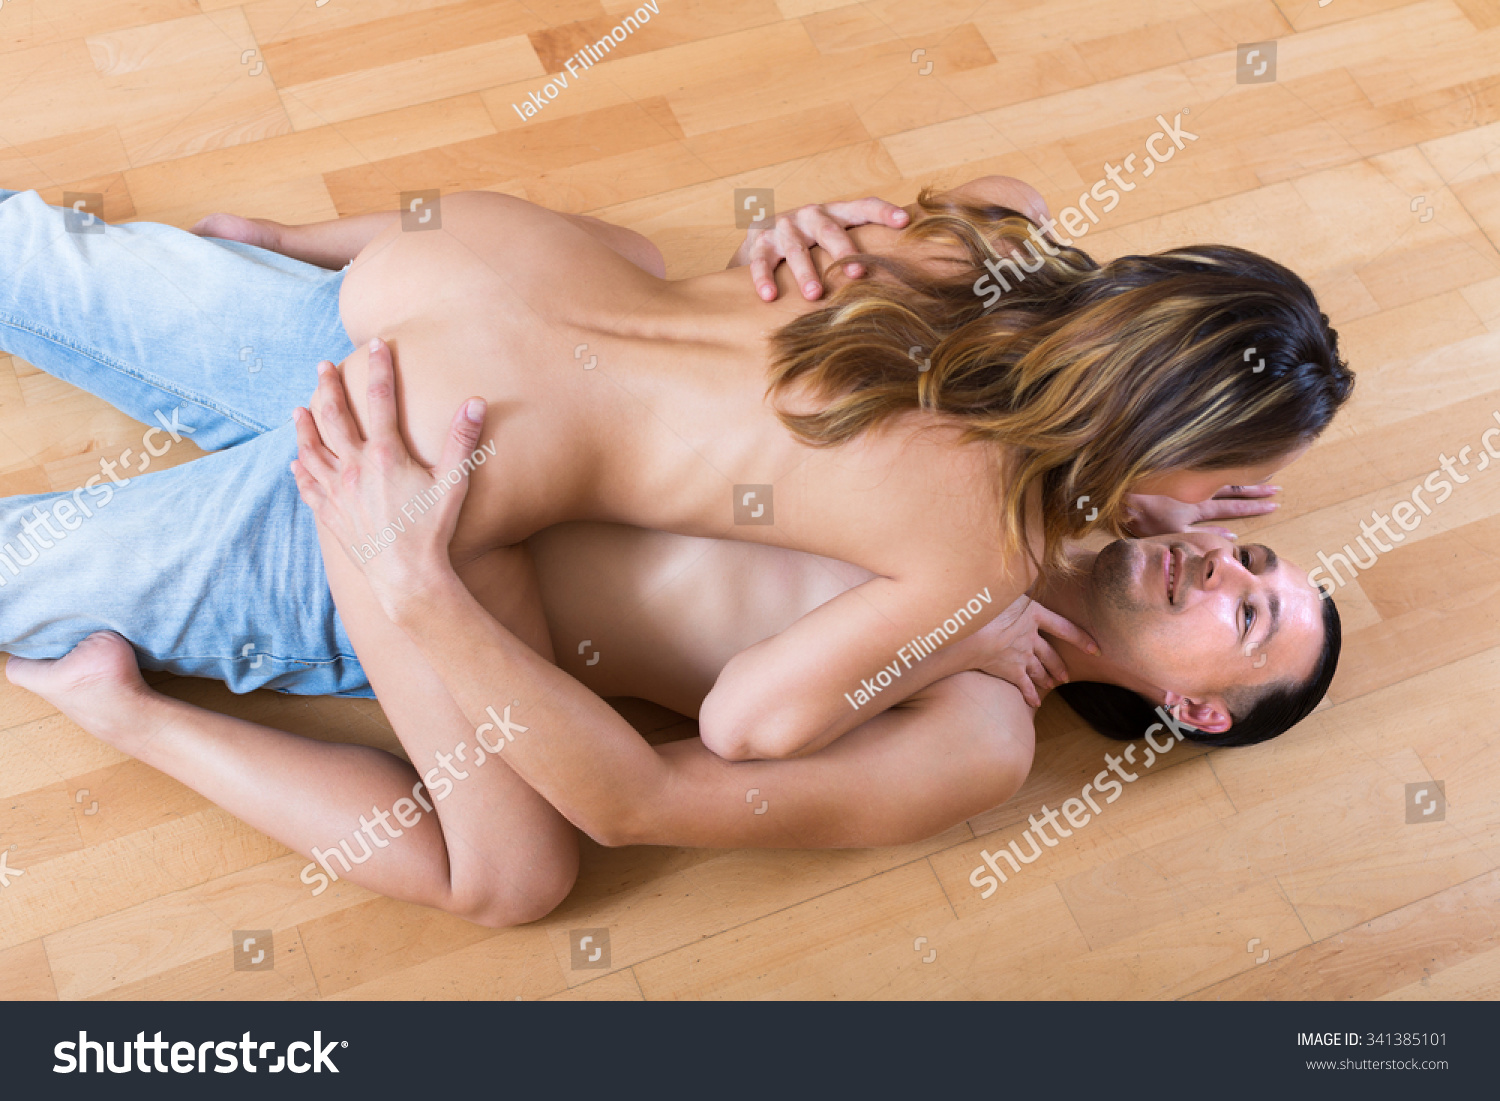 conrad sinclair add hot nude woman having sex photo